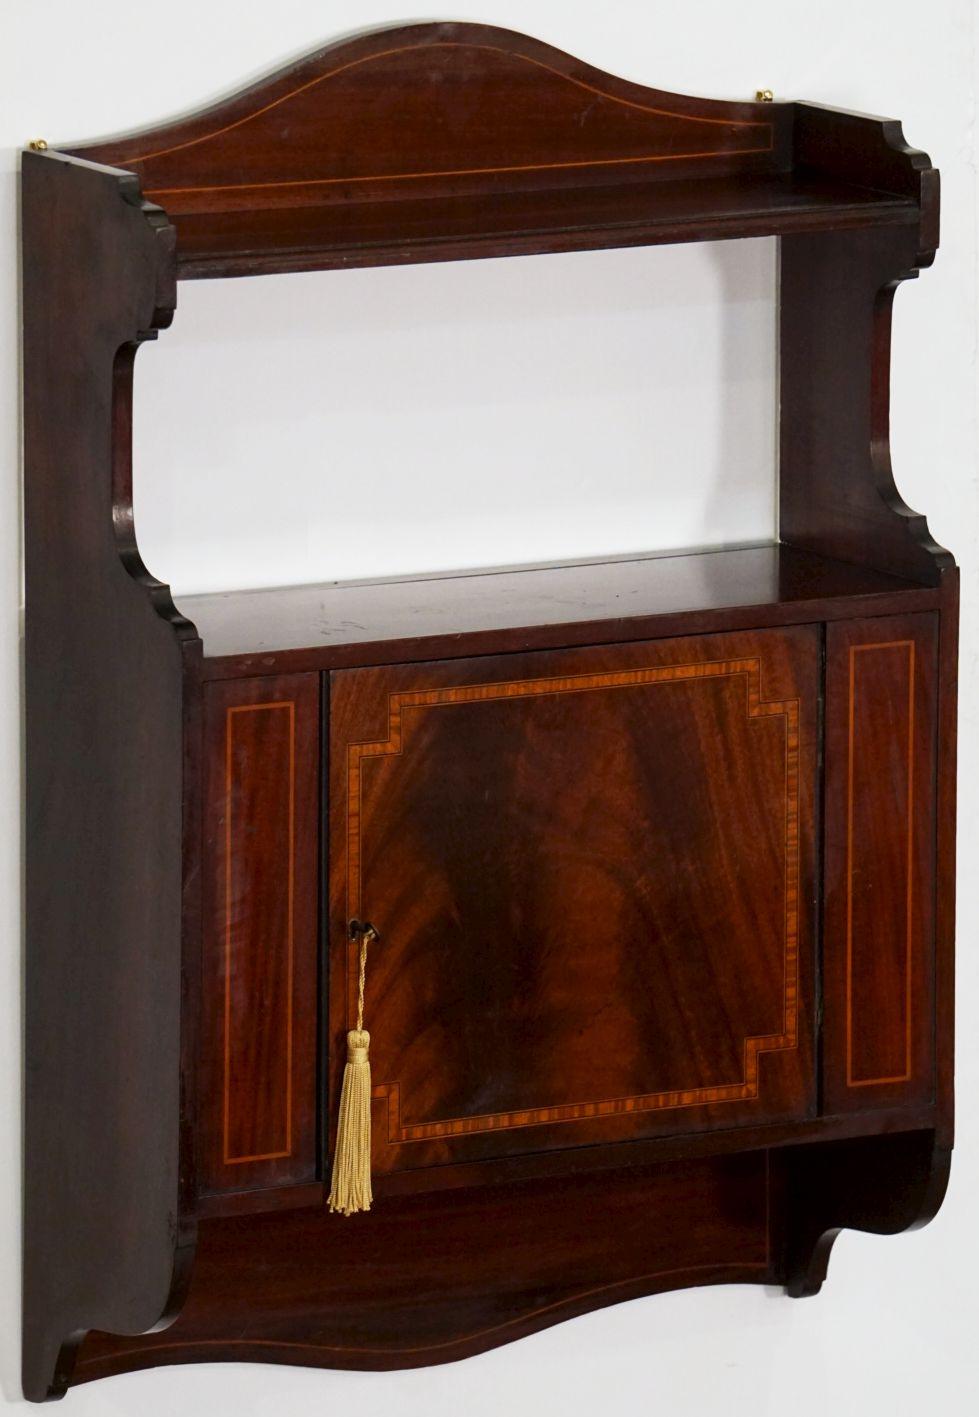 Inlay English Hanging Shelf or Curio Cabinet of Inlaid Mahogany